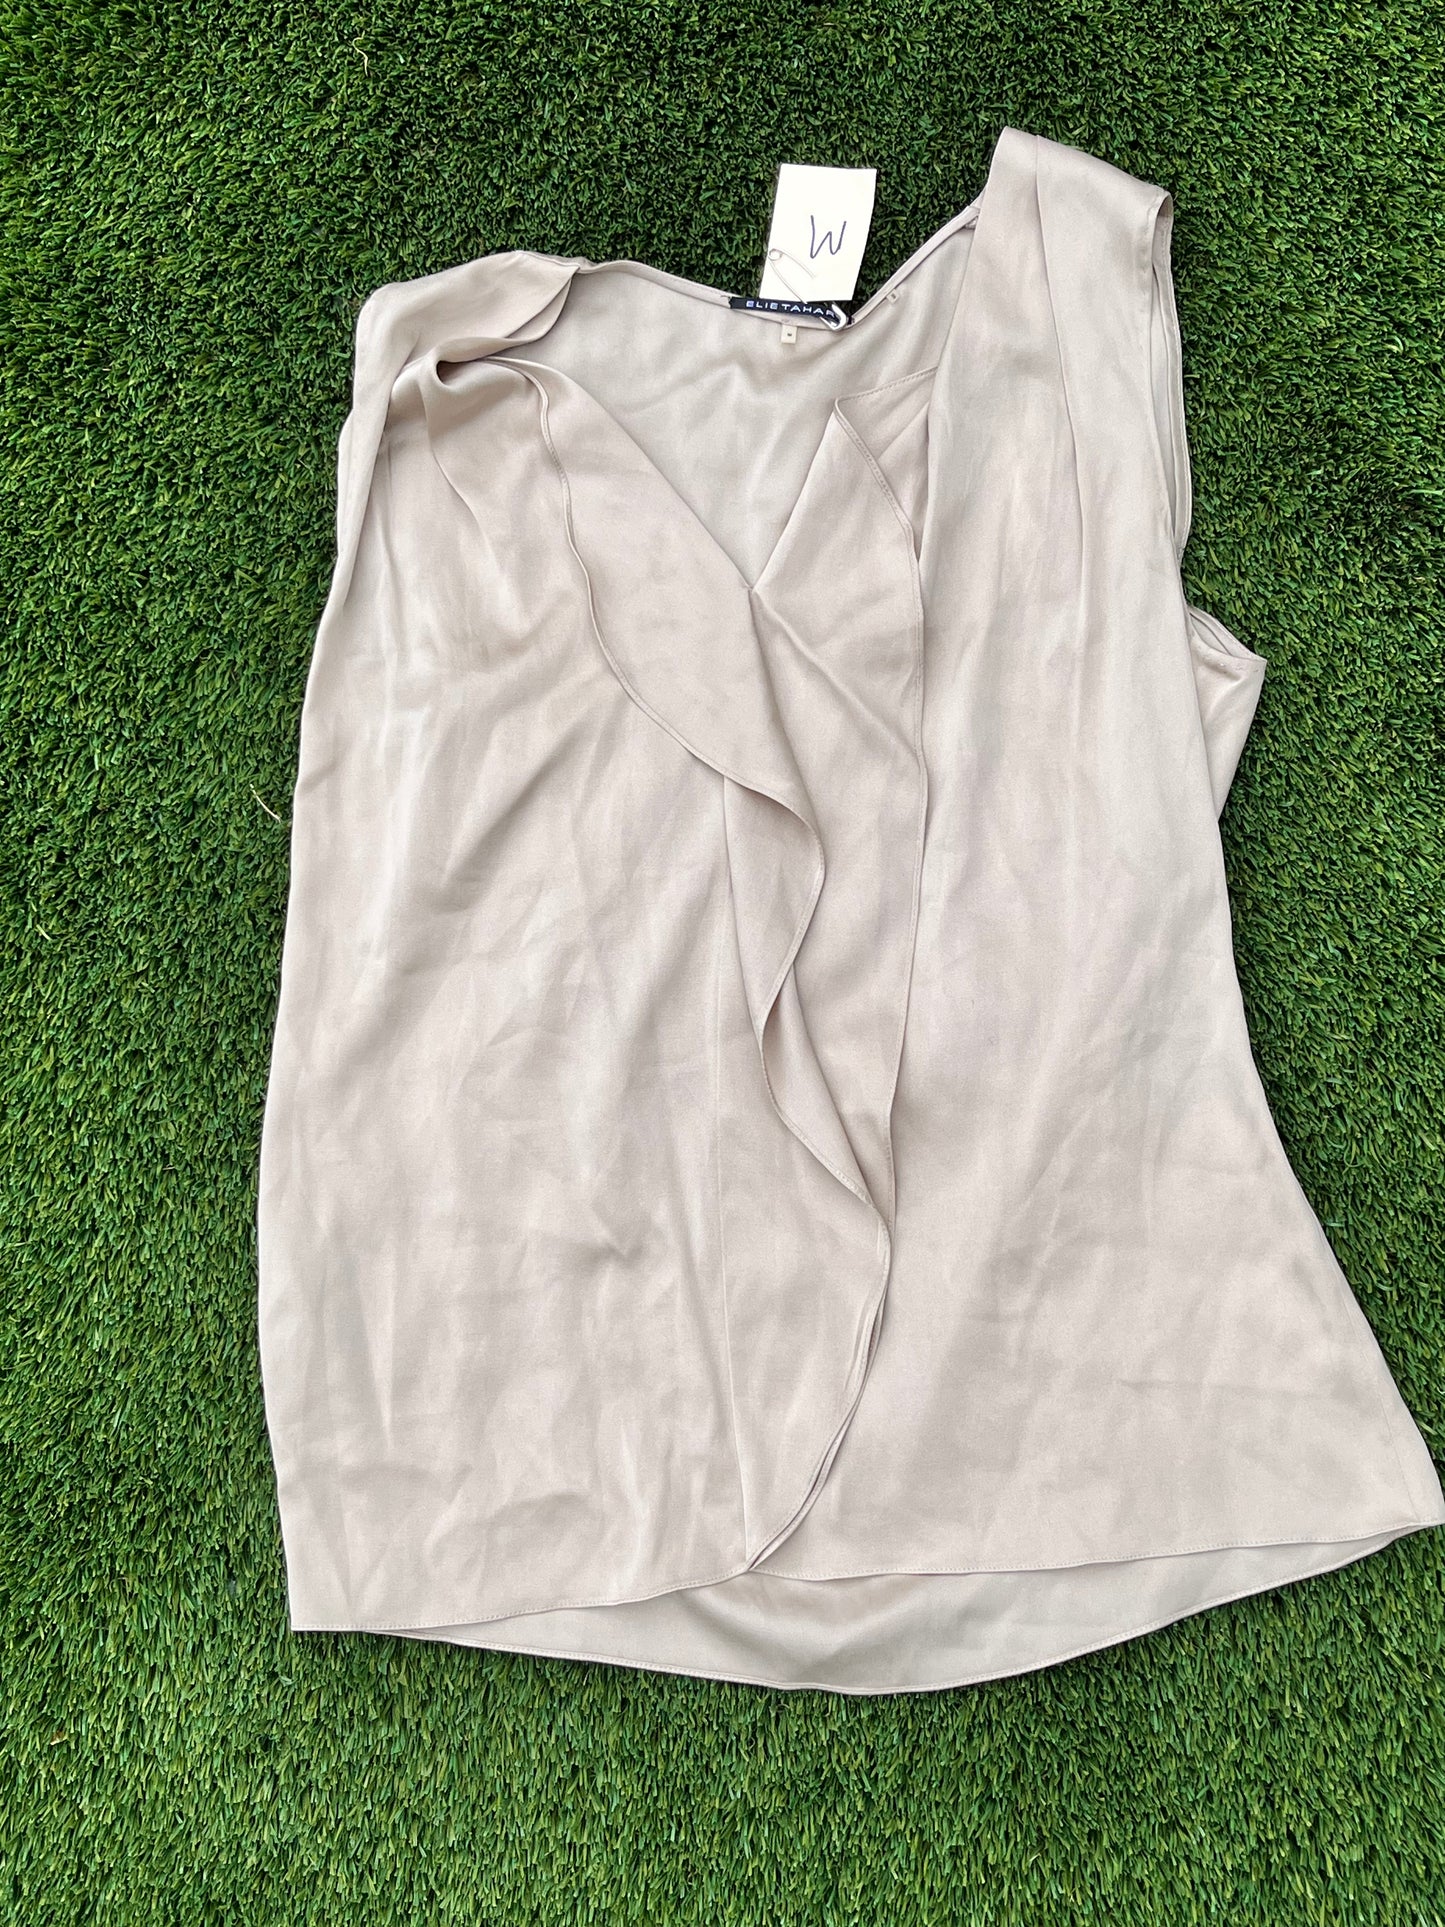 BONES: Dr Brennan's Sleeveless Shirt Collection